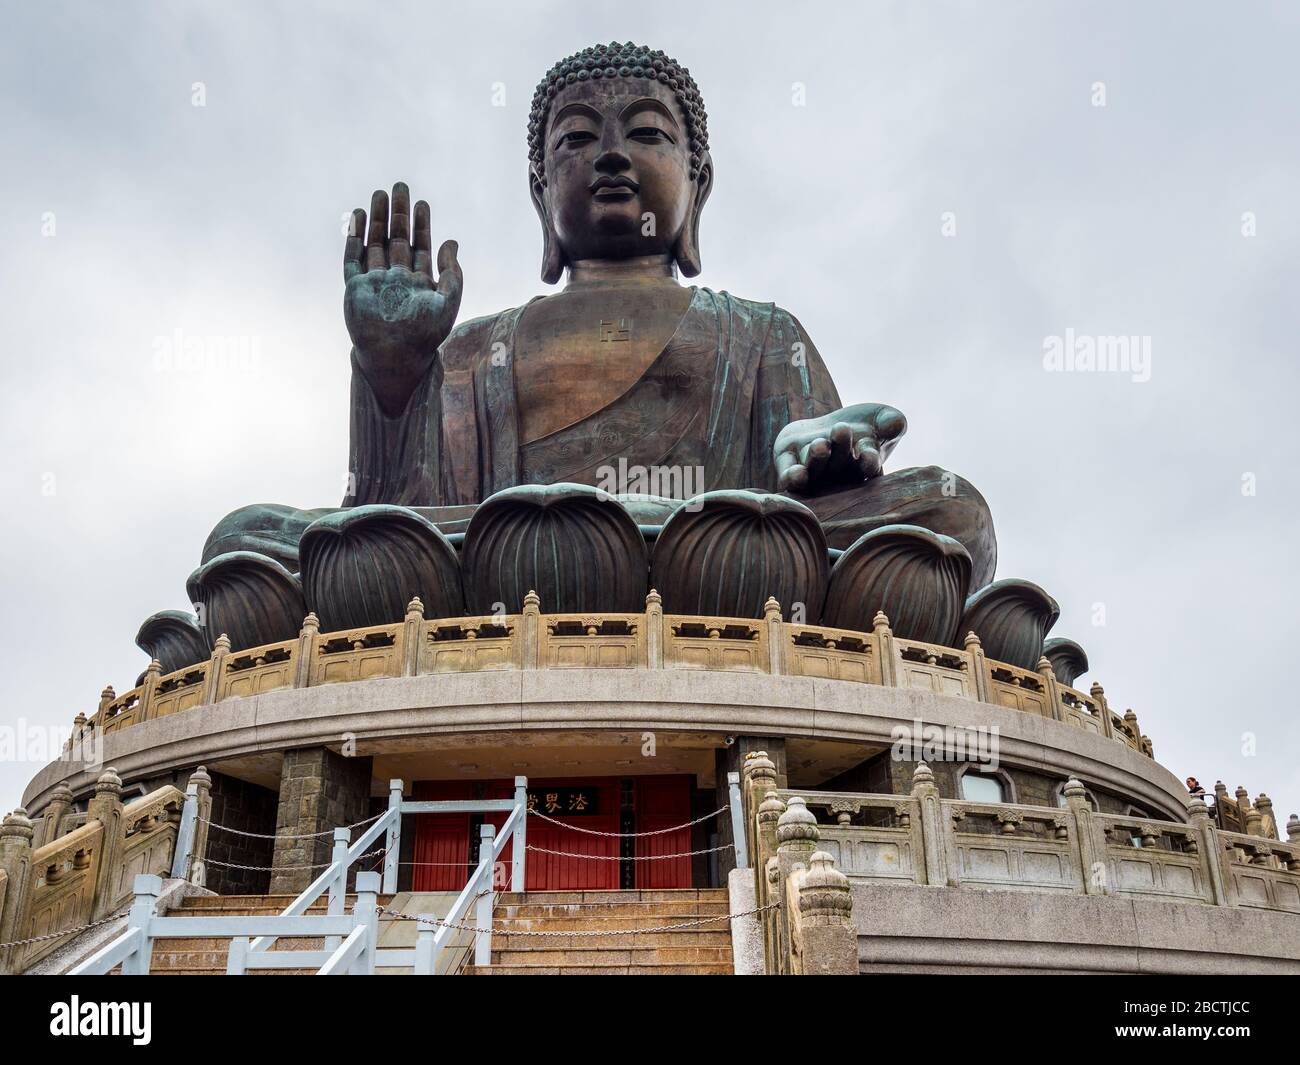 Tian Tan Buddha a large bronze statue of Buddha Shakyamuni, completed 1993, located near Po Lin Monastery, Ngong Ping, Lantau Island, Hong Kong China Stock Photo